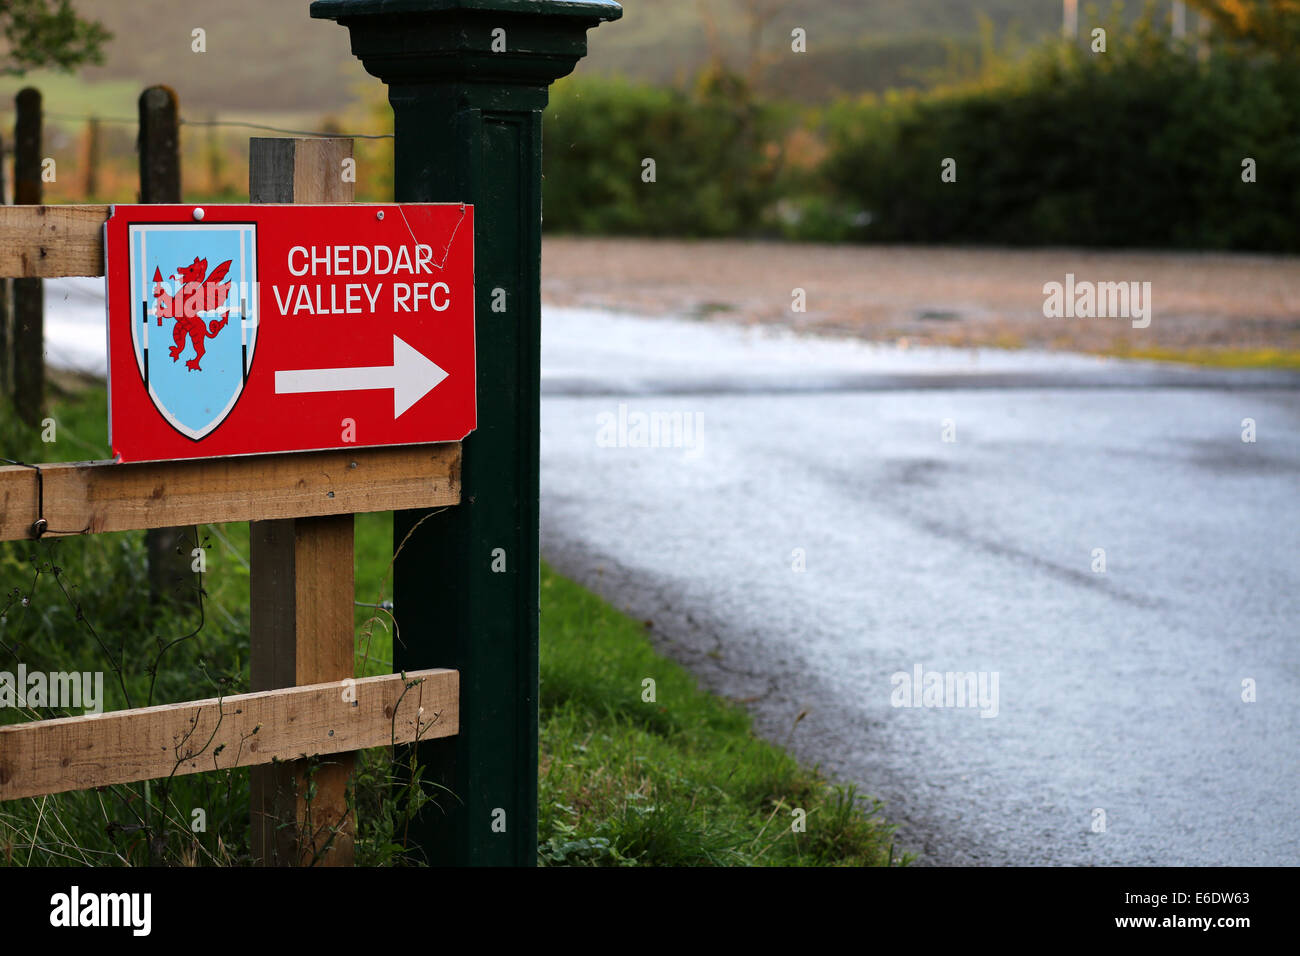 Direction de la vallée de Cheddar Rugy RFC club car park, Août 2014 Banque D'Images